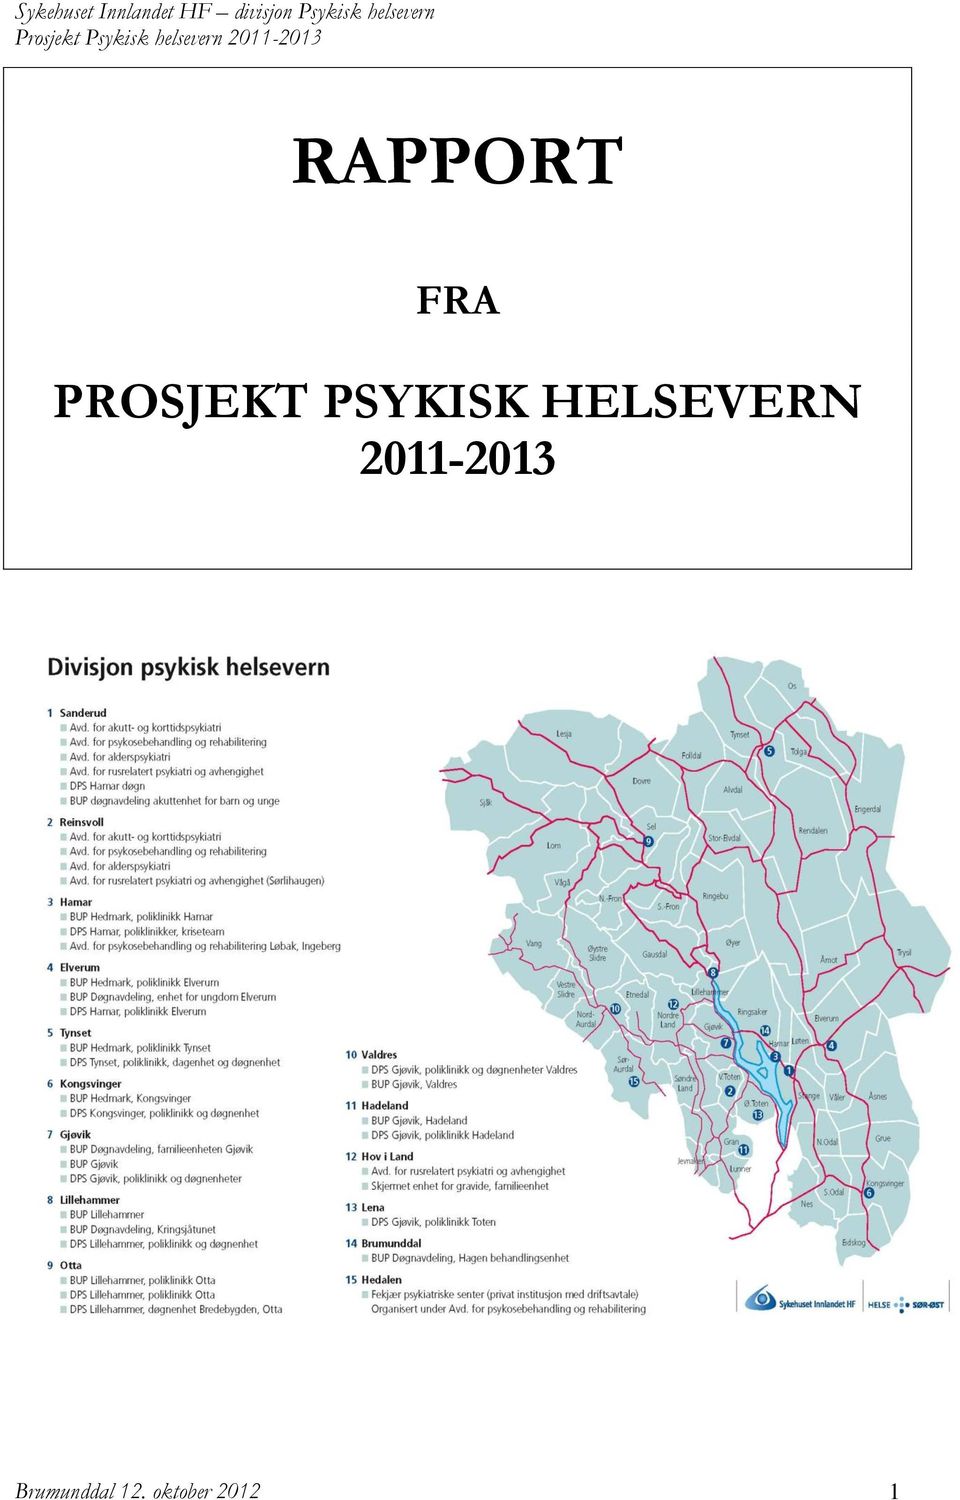 HELSEVERN 2011-2013